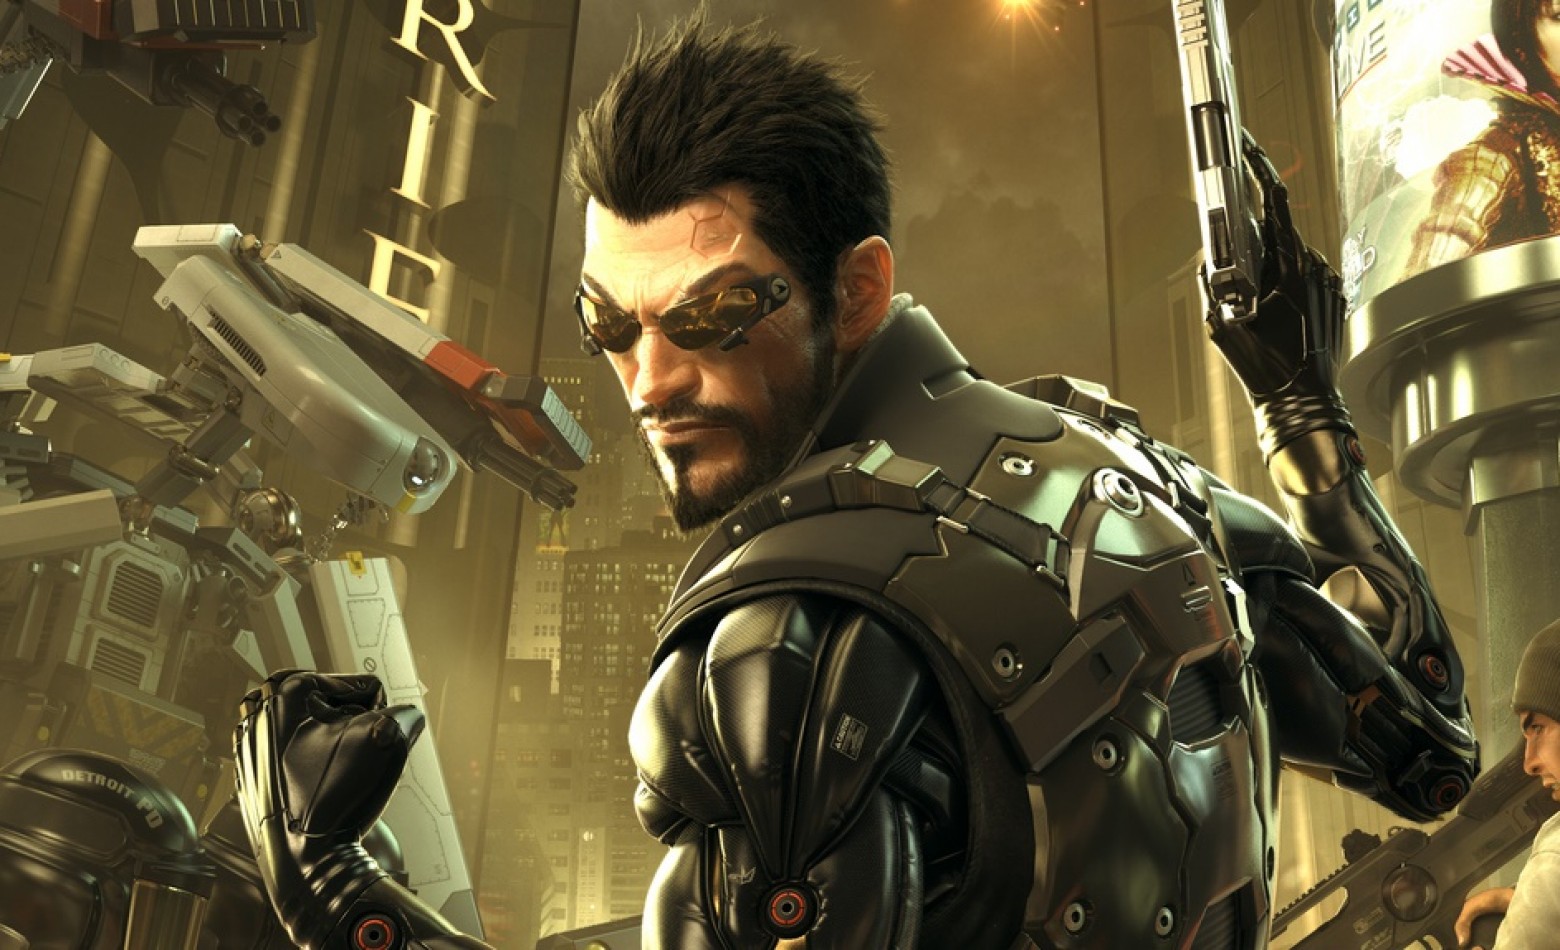 Gameplay gratuito: o futuro e a distopia de Deus Ex: Human Revolution